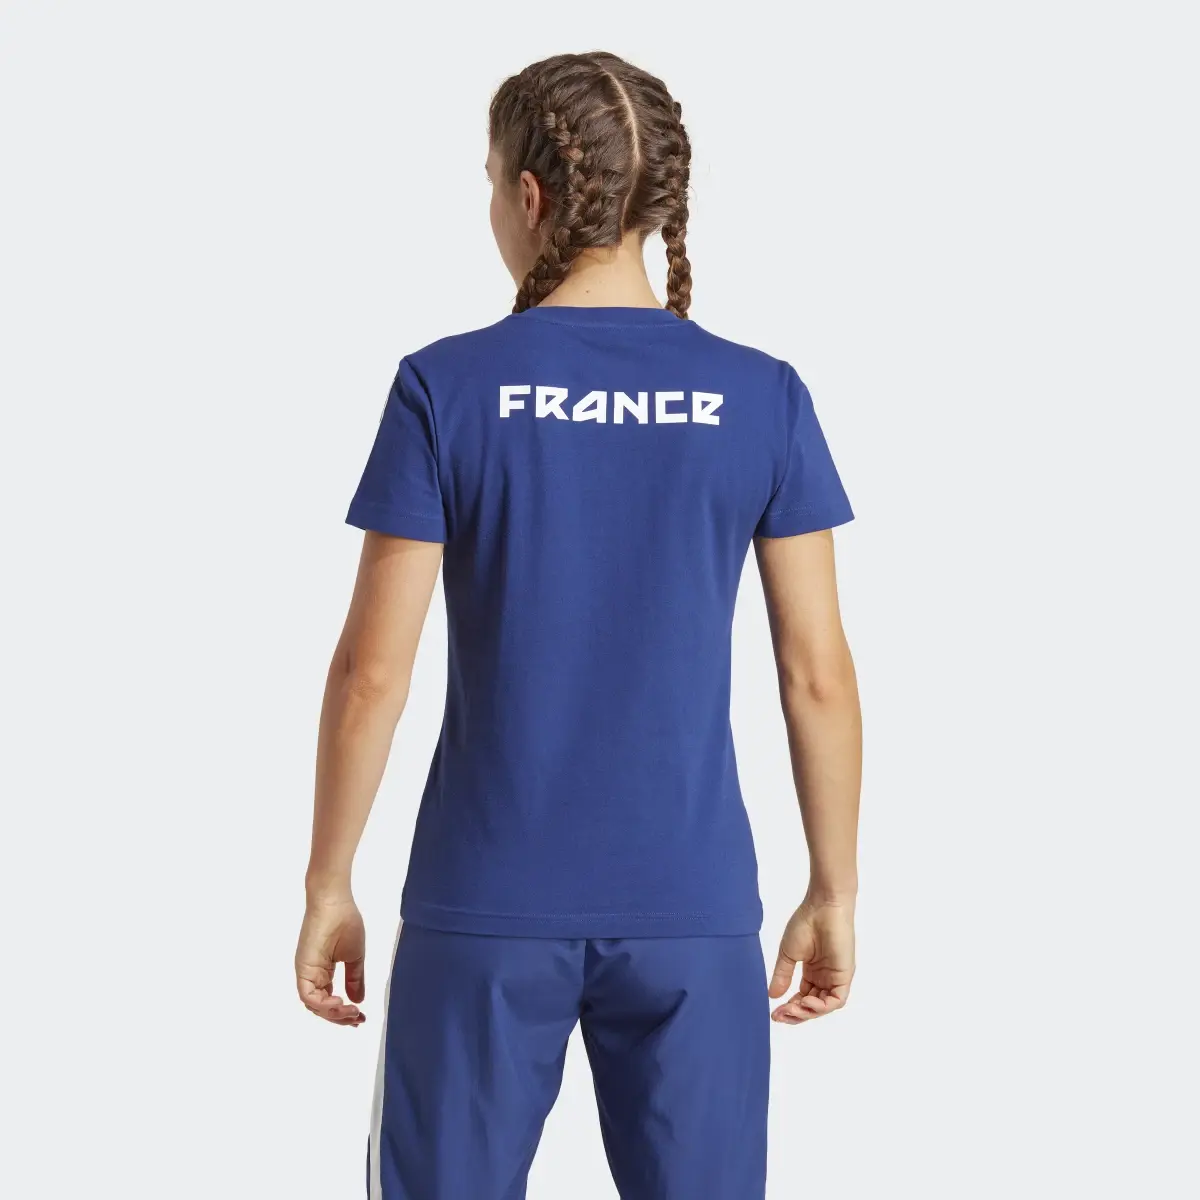 Adidas France Cotton Graphic T-Shirt. 3